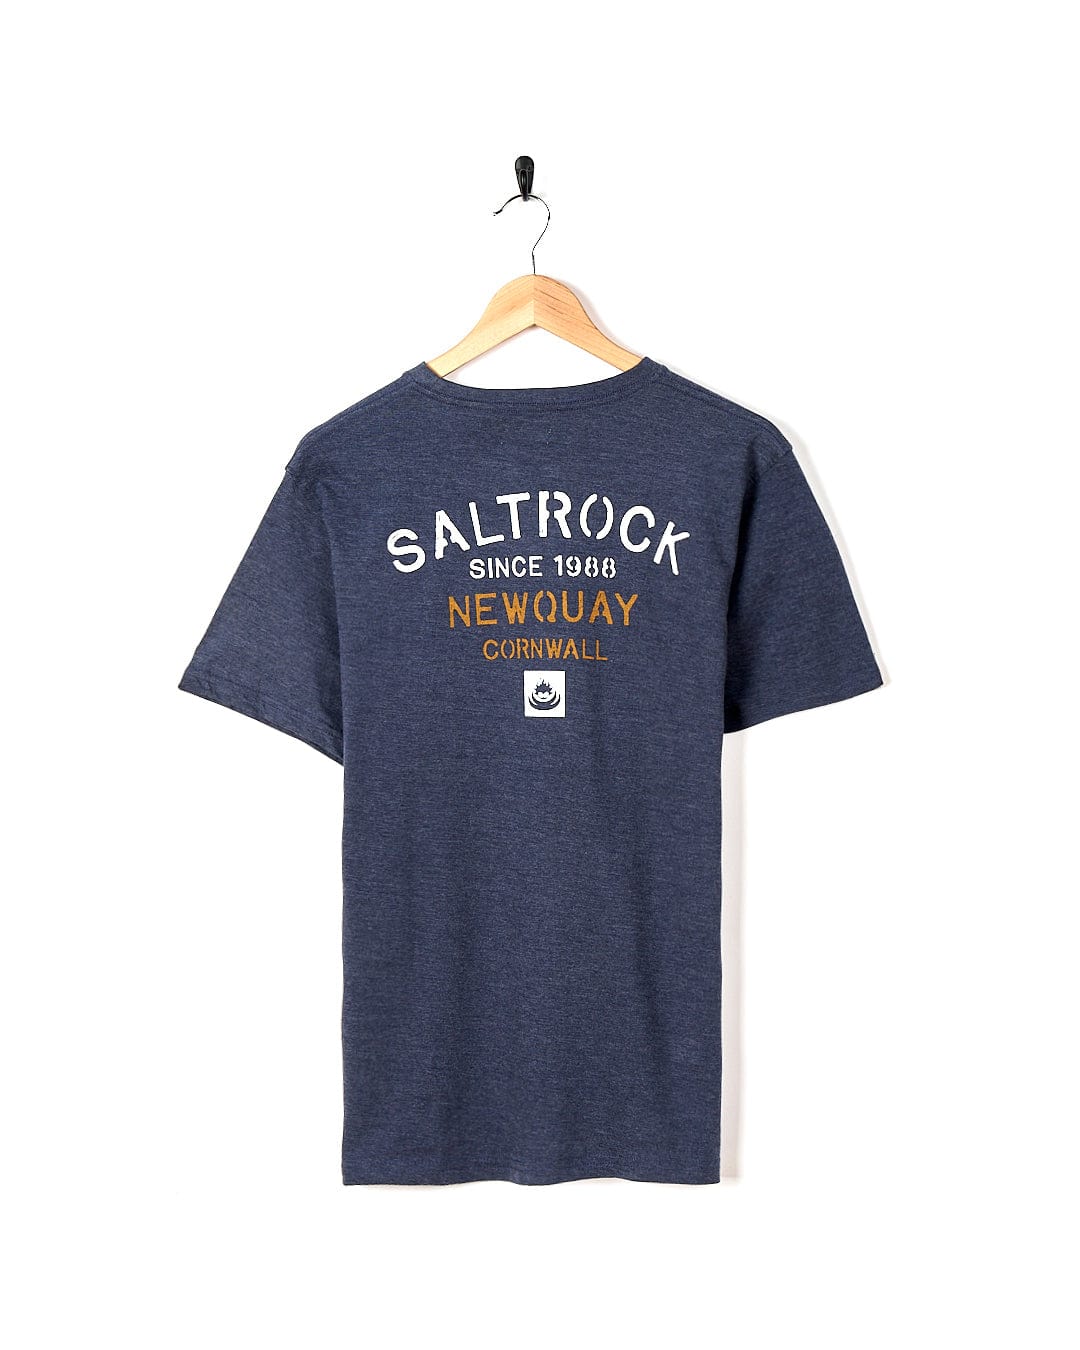 A Stencil - Location T-Shirt - Newquay - Blue by Saltrock t-shirt.